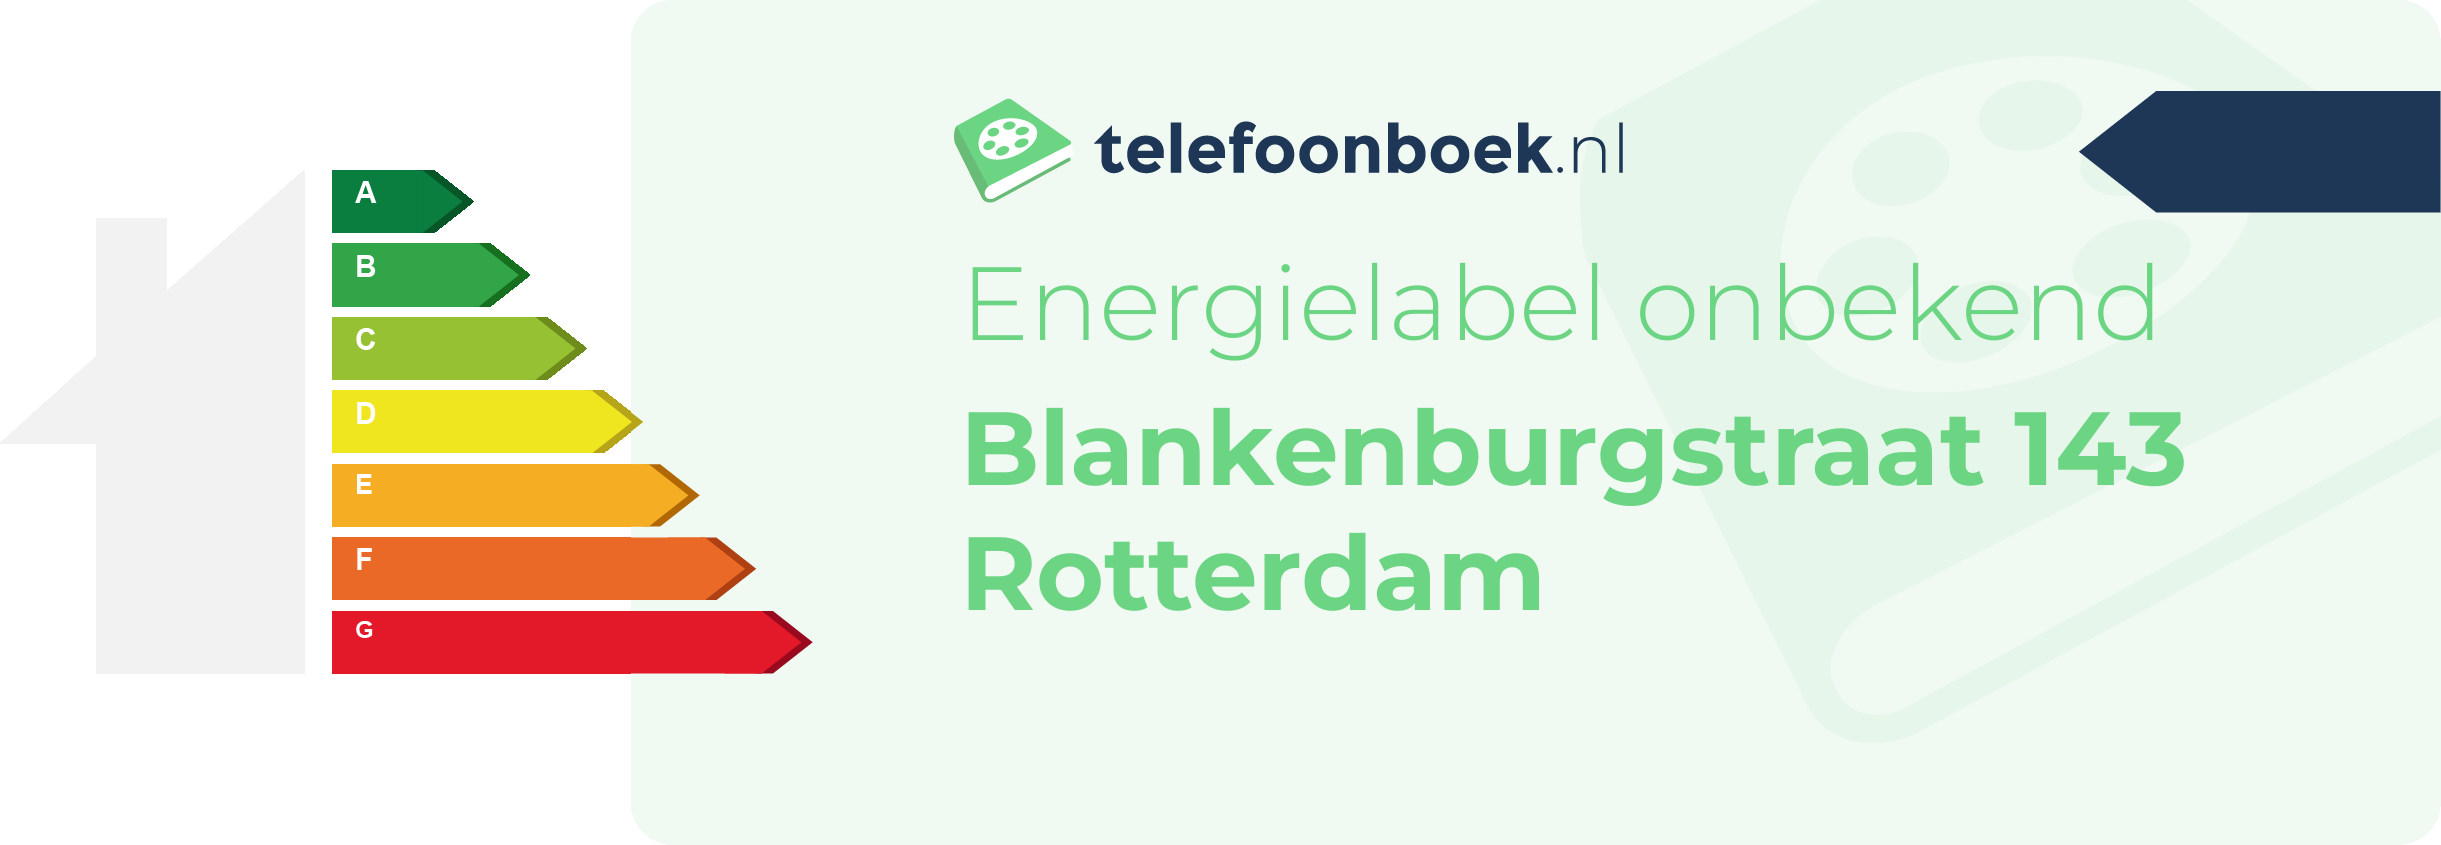 Energielabel Blankenburgstraat 143 Rotterdam